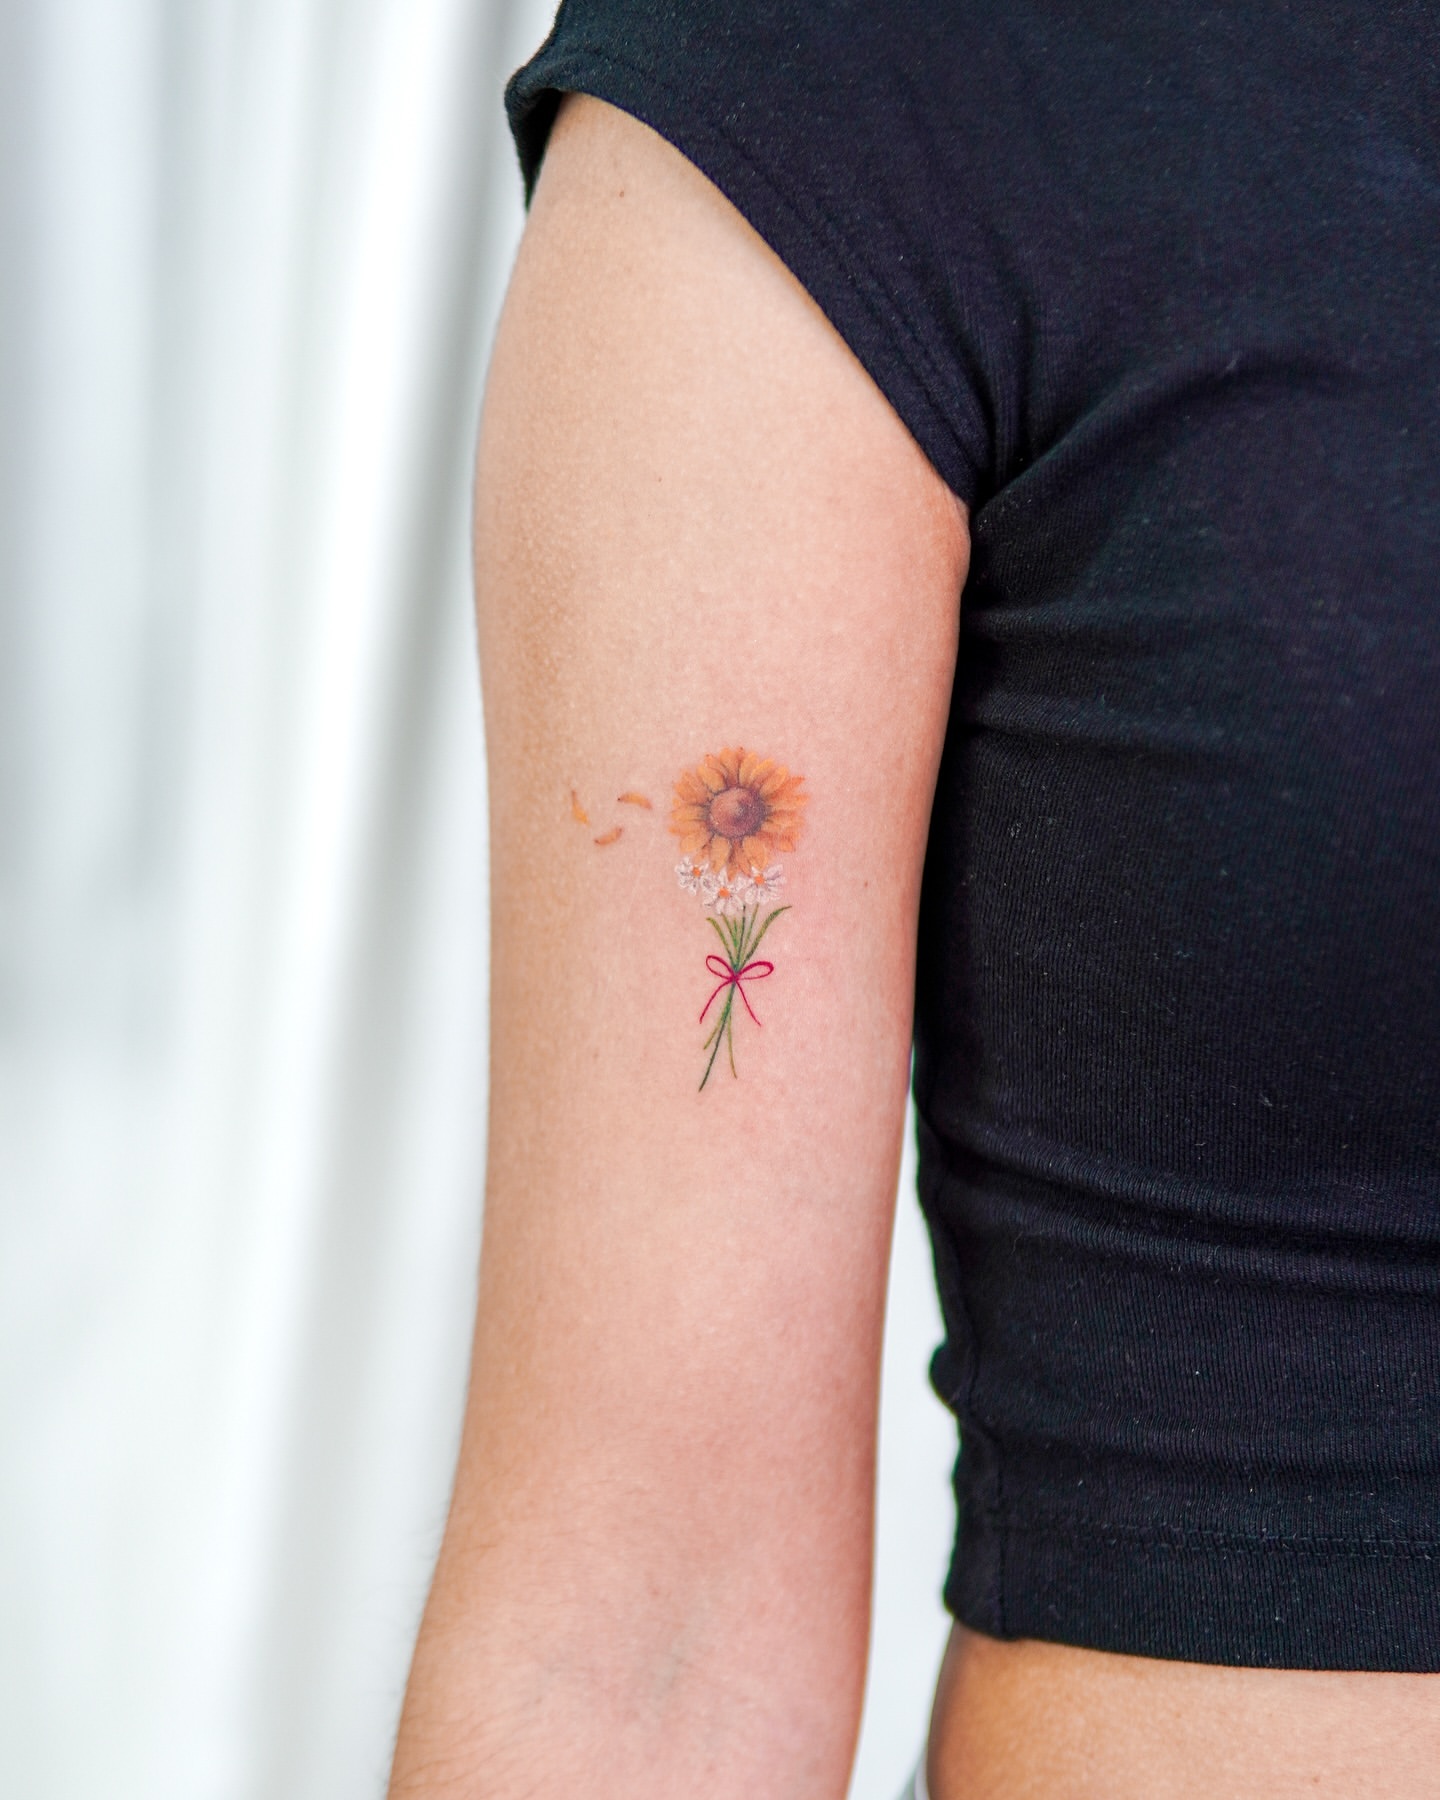 tatuaje de un pequeño girasol